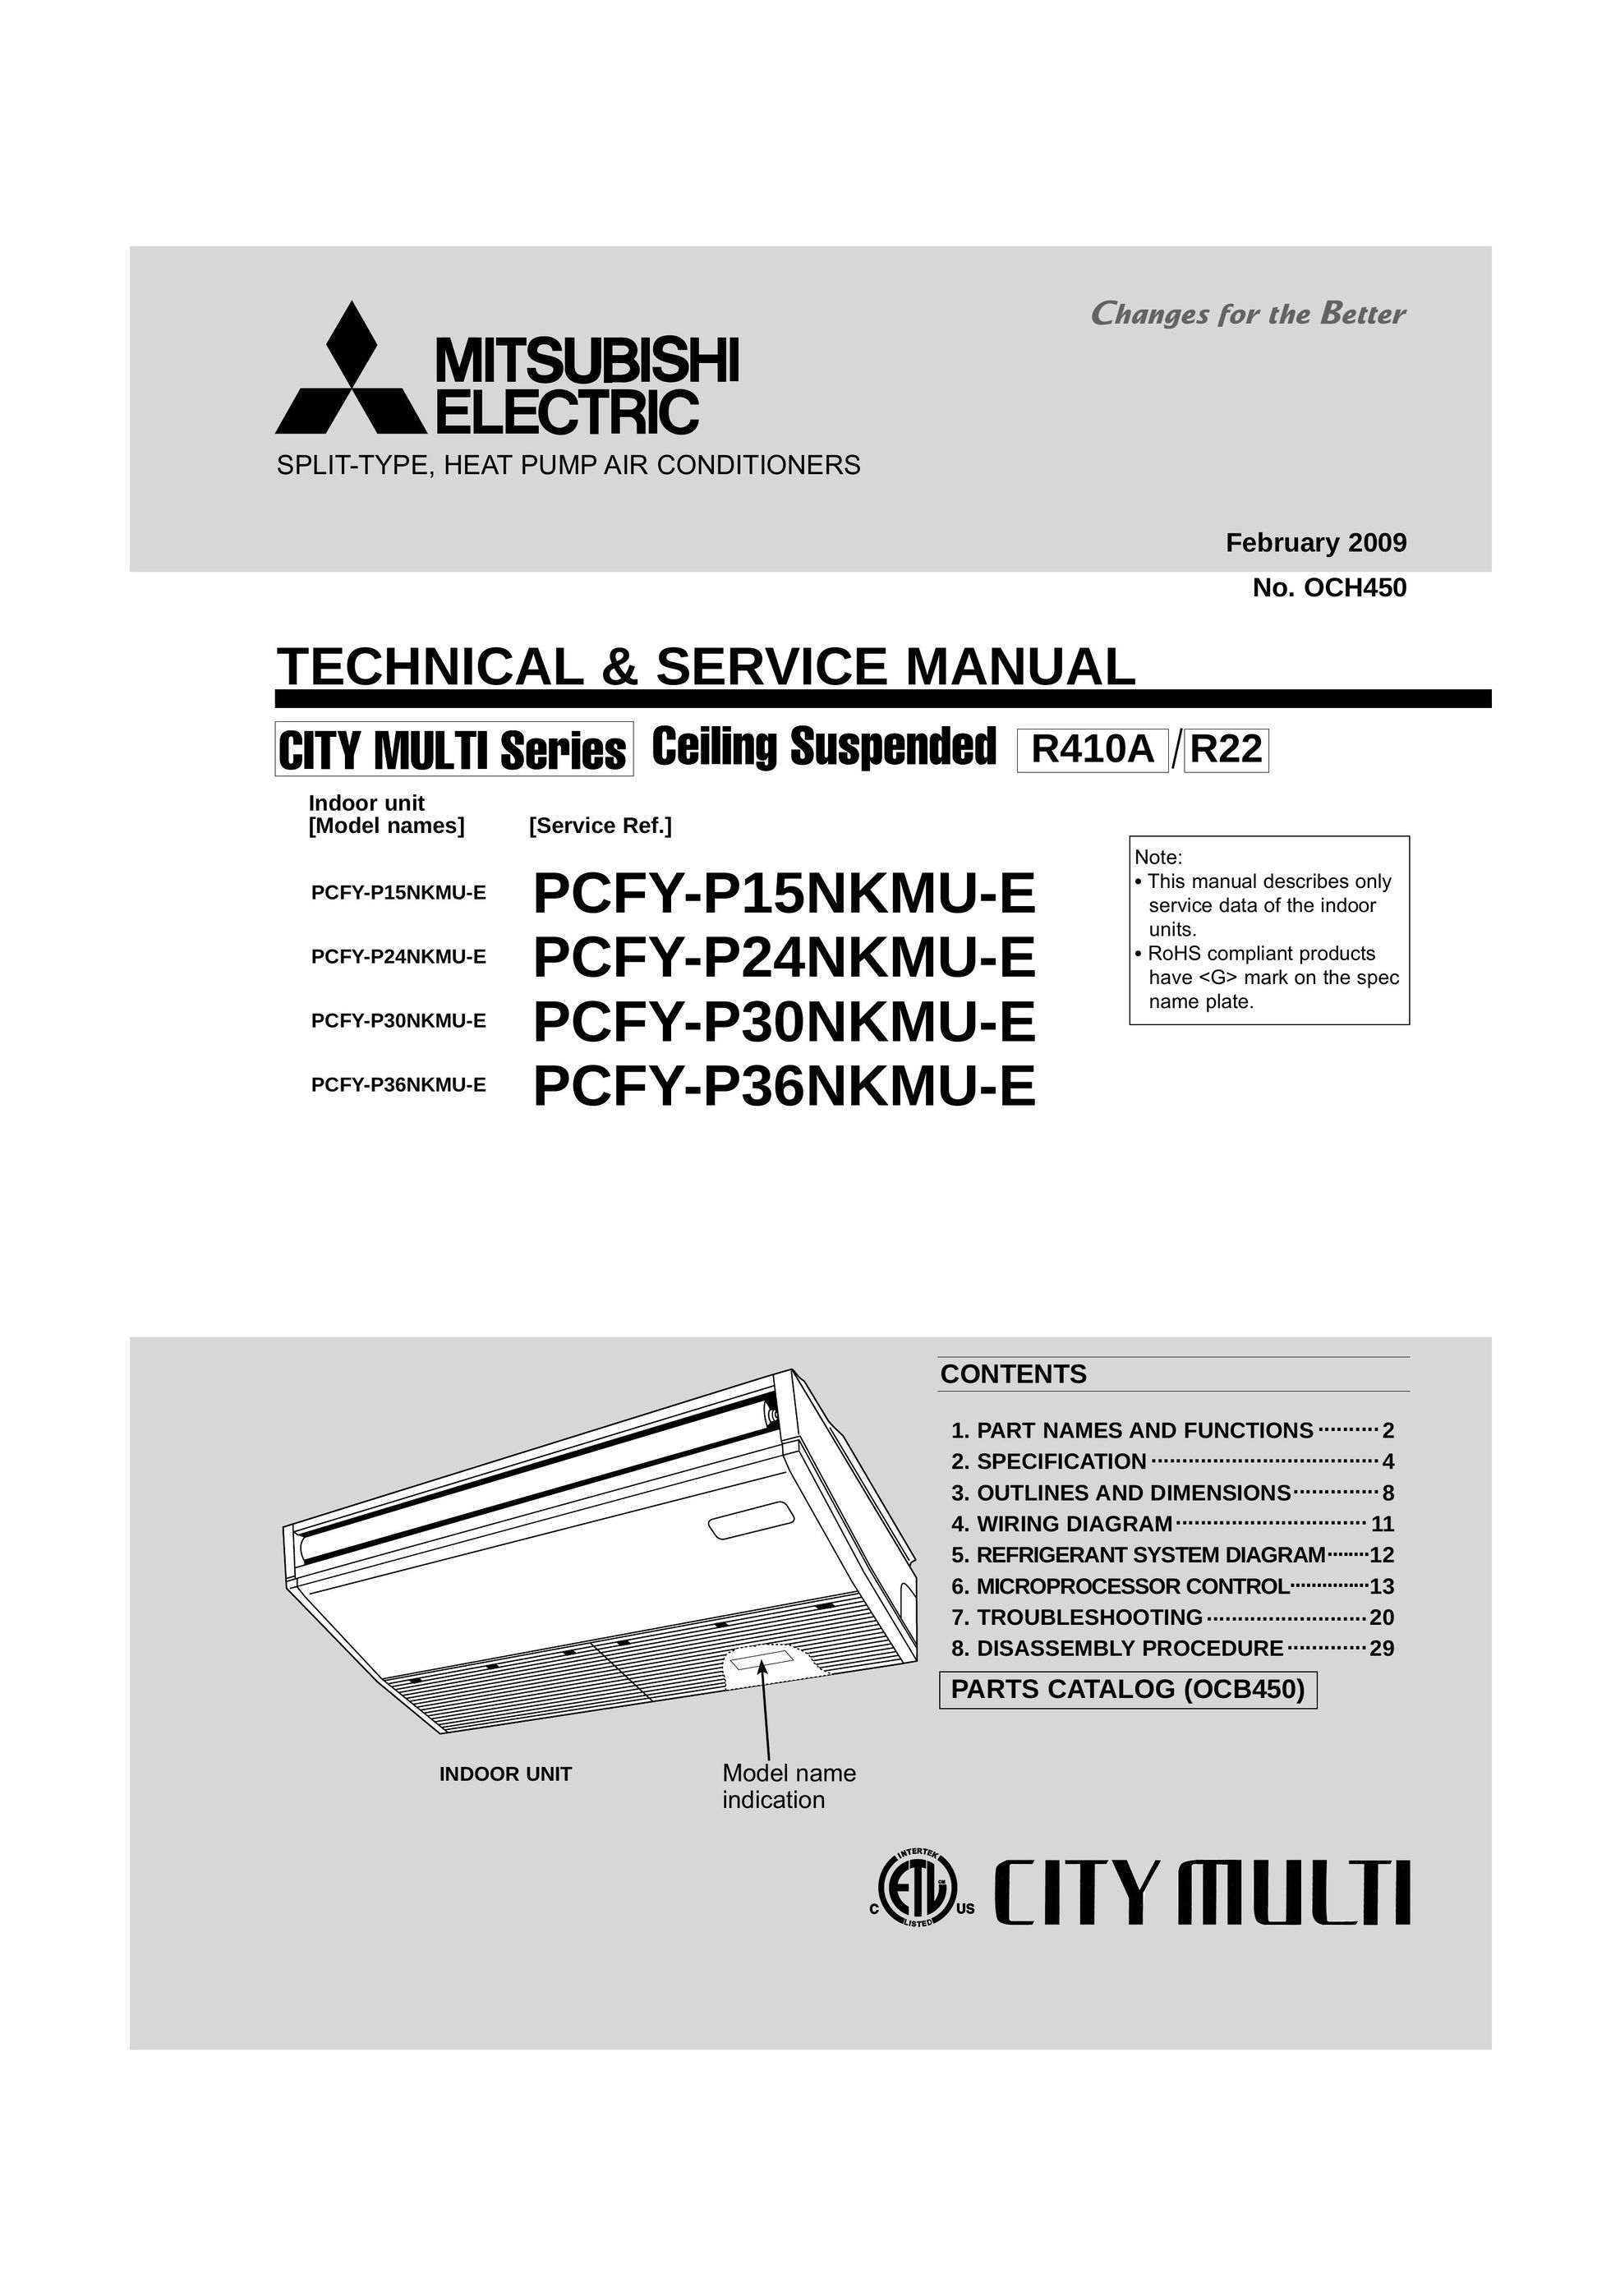 Mitsubishi Electronics PCFY-P36NKMU-E Heat Pump User Manual